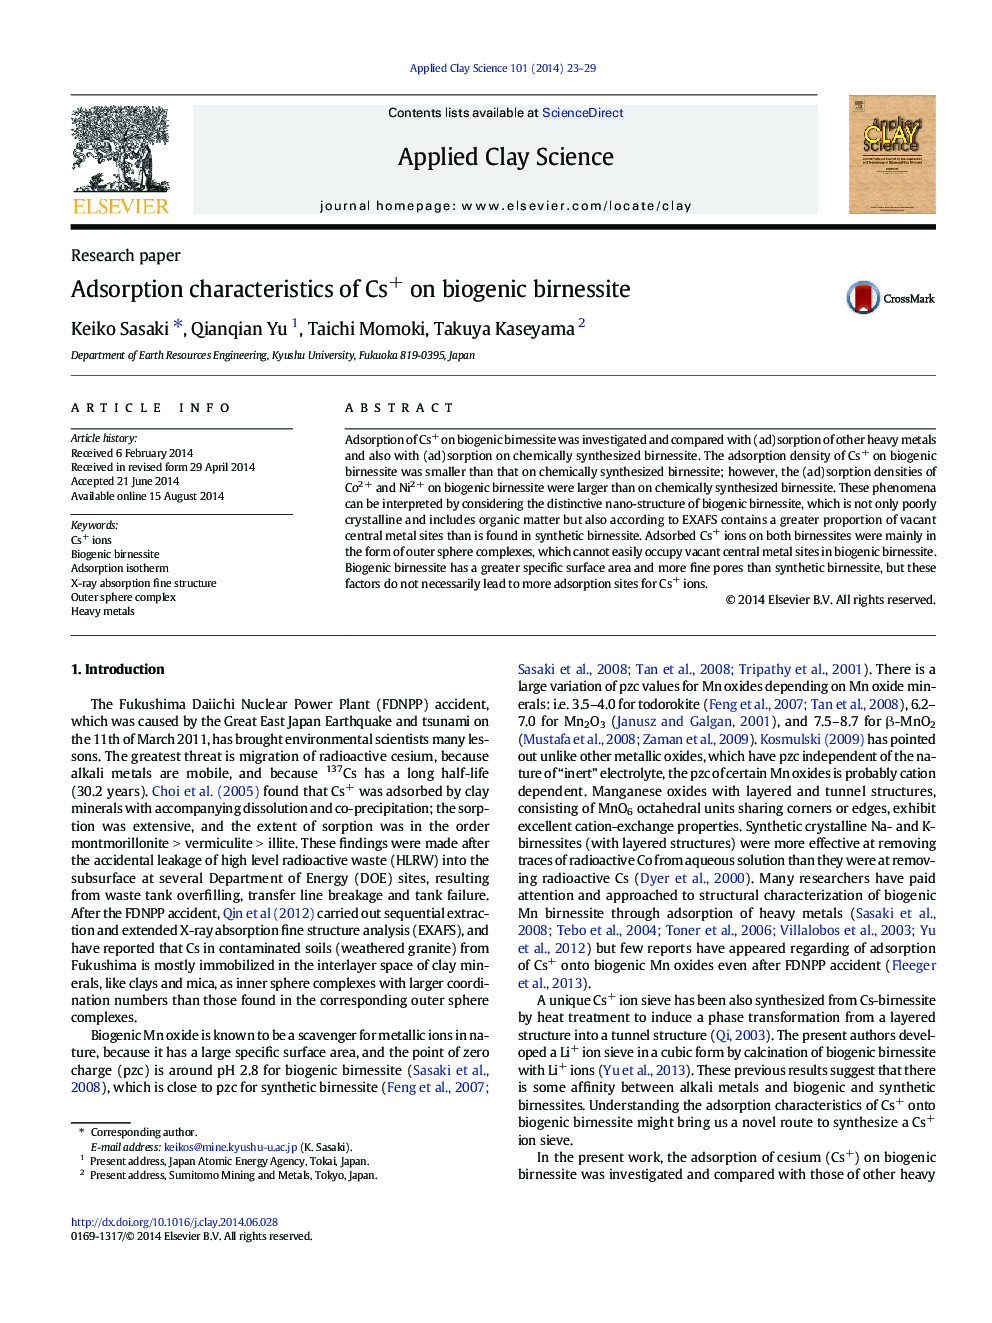 Adsorption characteristics of Cs+ on biogenic birnessite